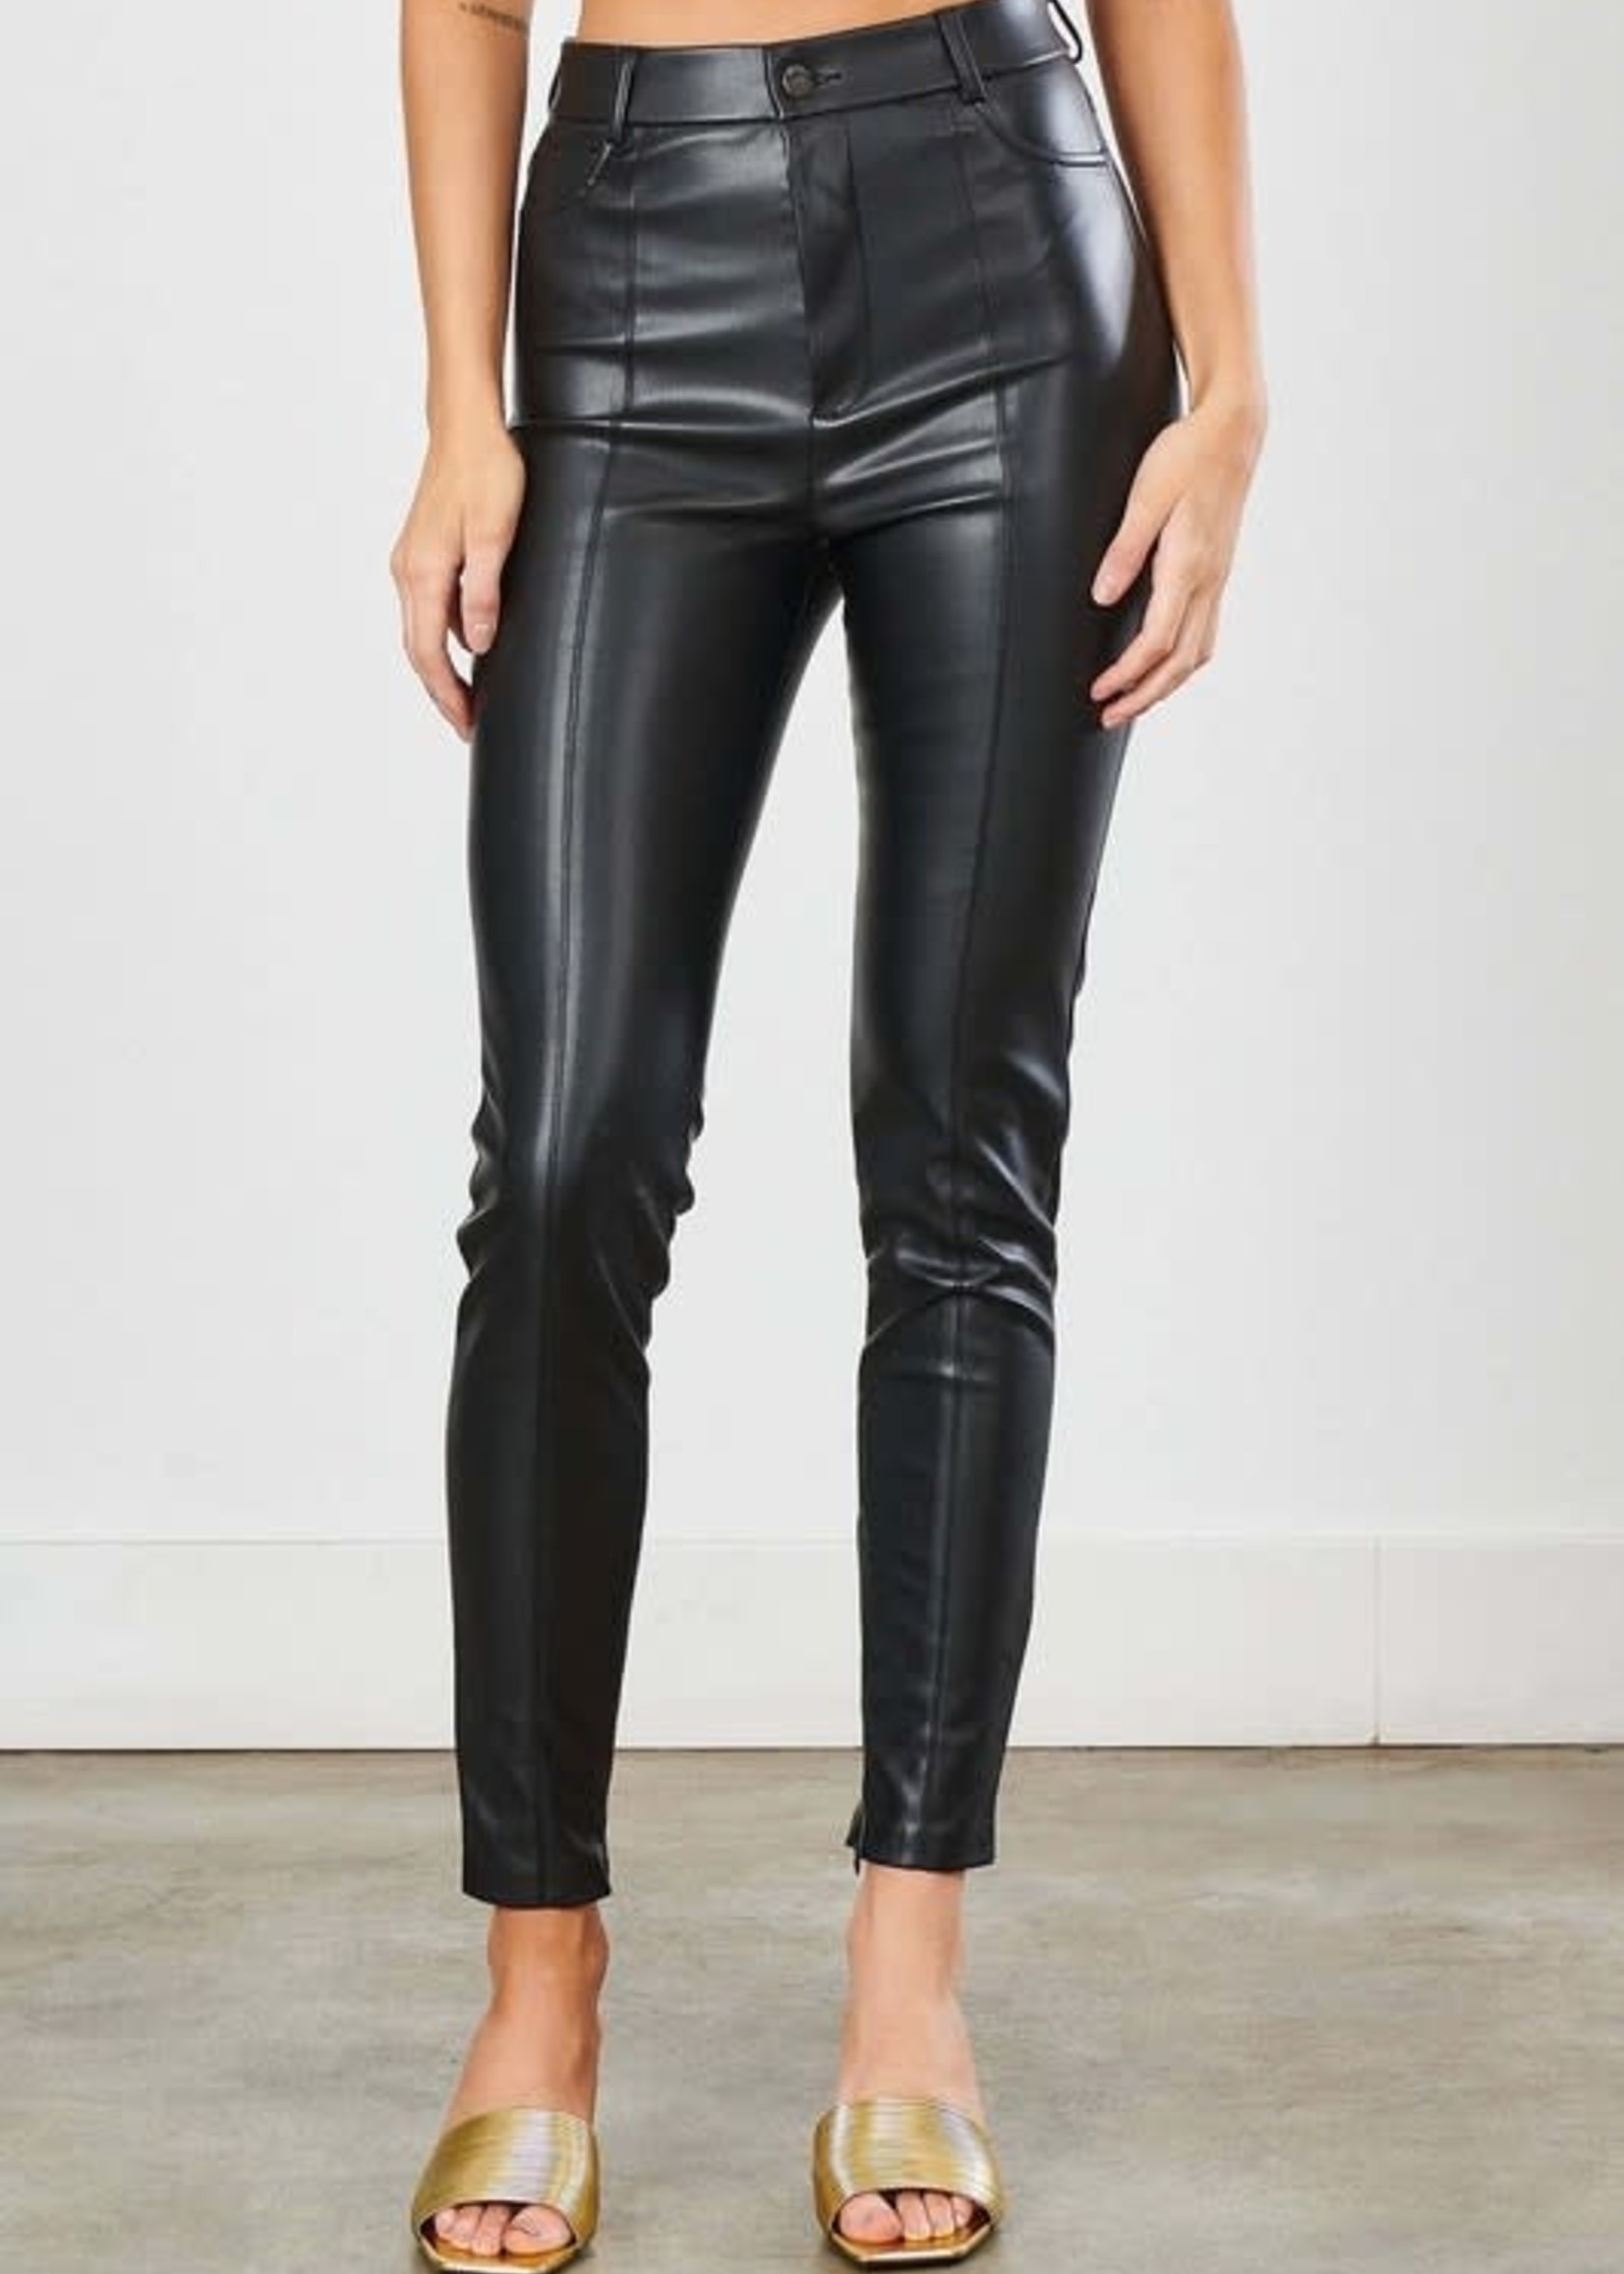 Skinny Black Leather Pants